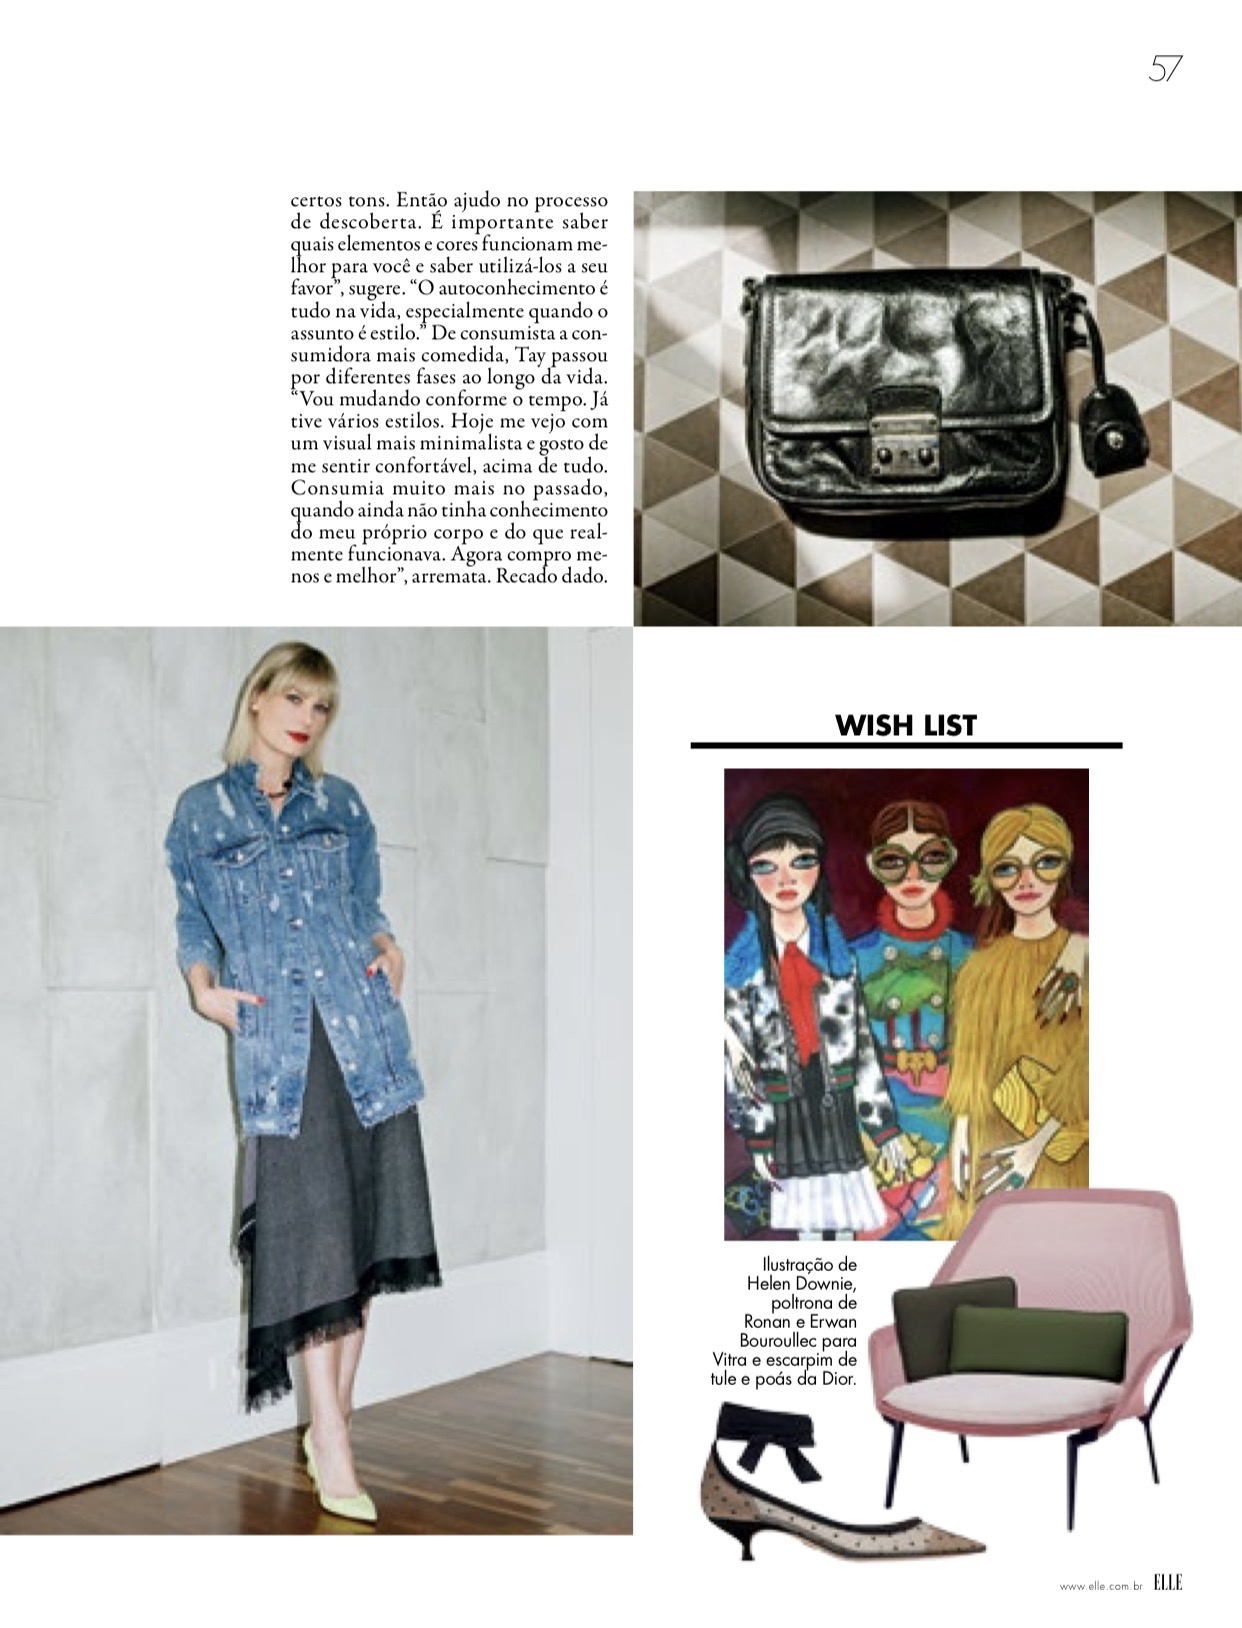 Pagina da revista elle brasil coluna fashionista com Tay Borges